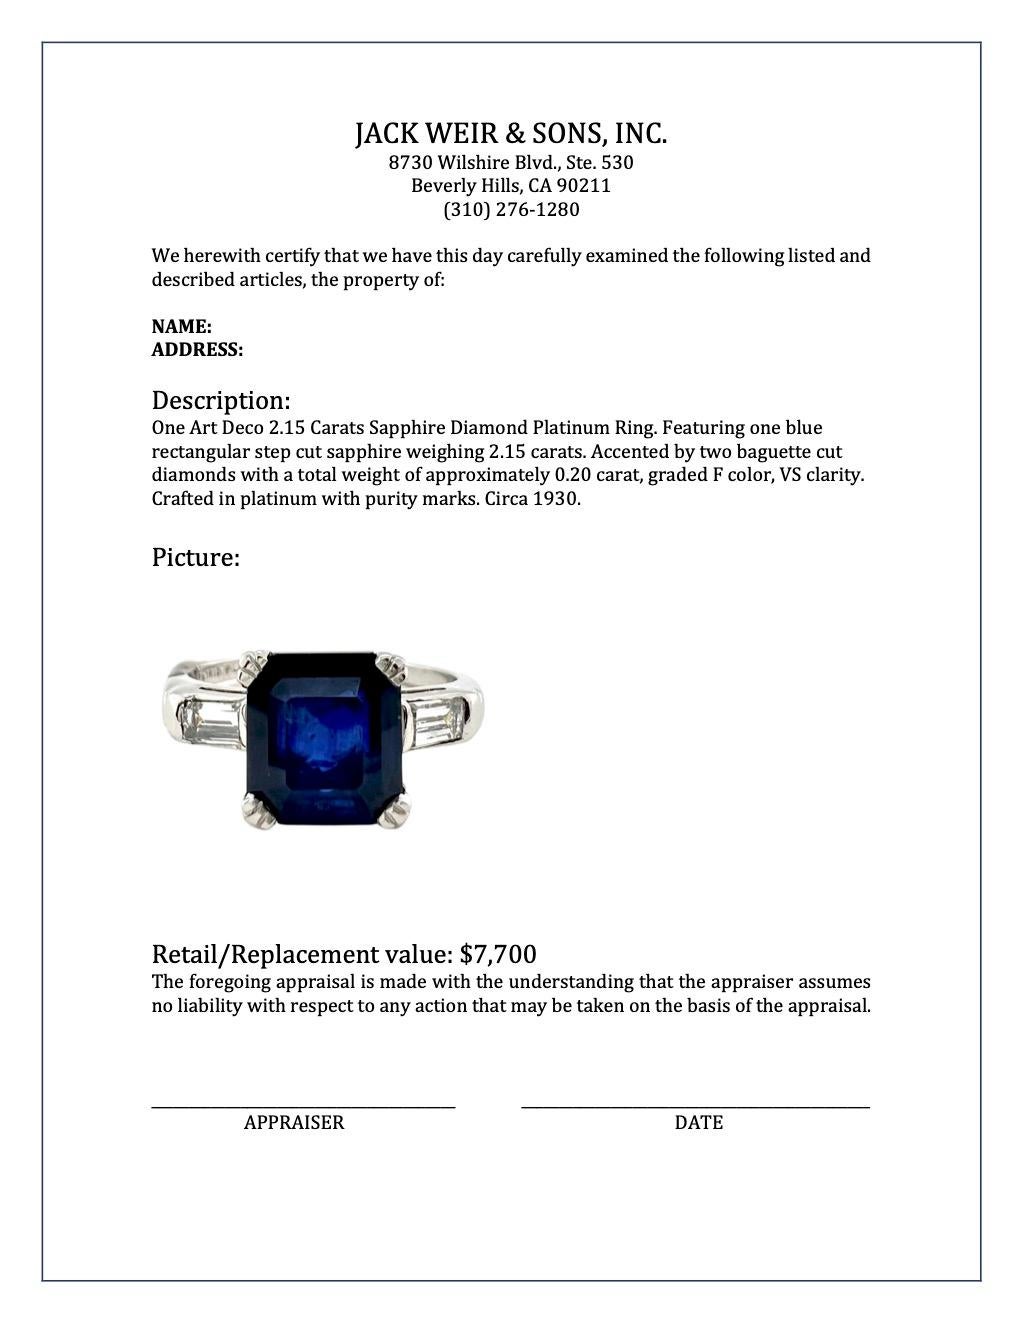 Art Deco 2.15 Carats Sapphire Diamond Platinum Ring 2